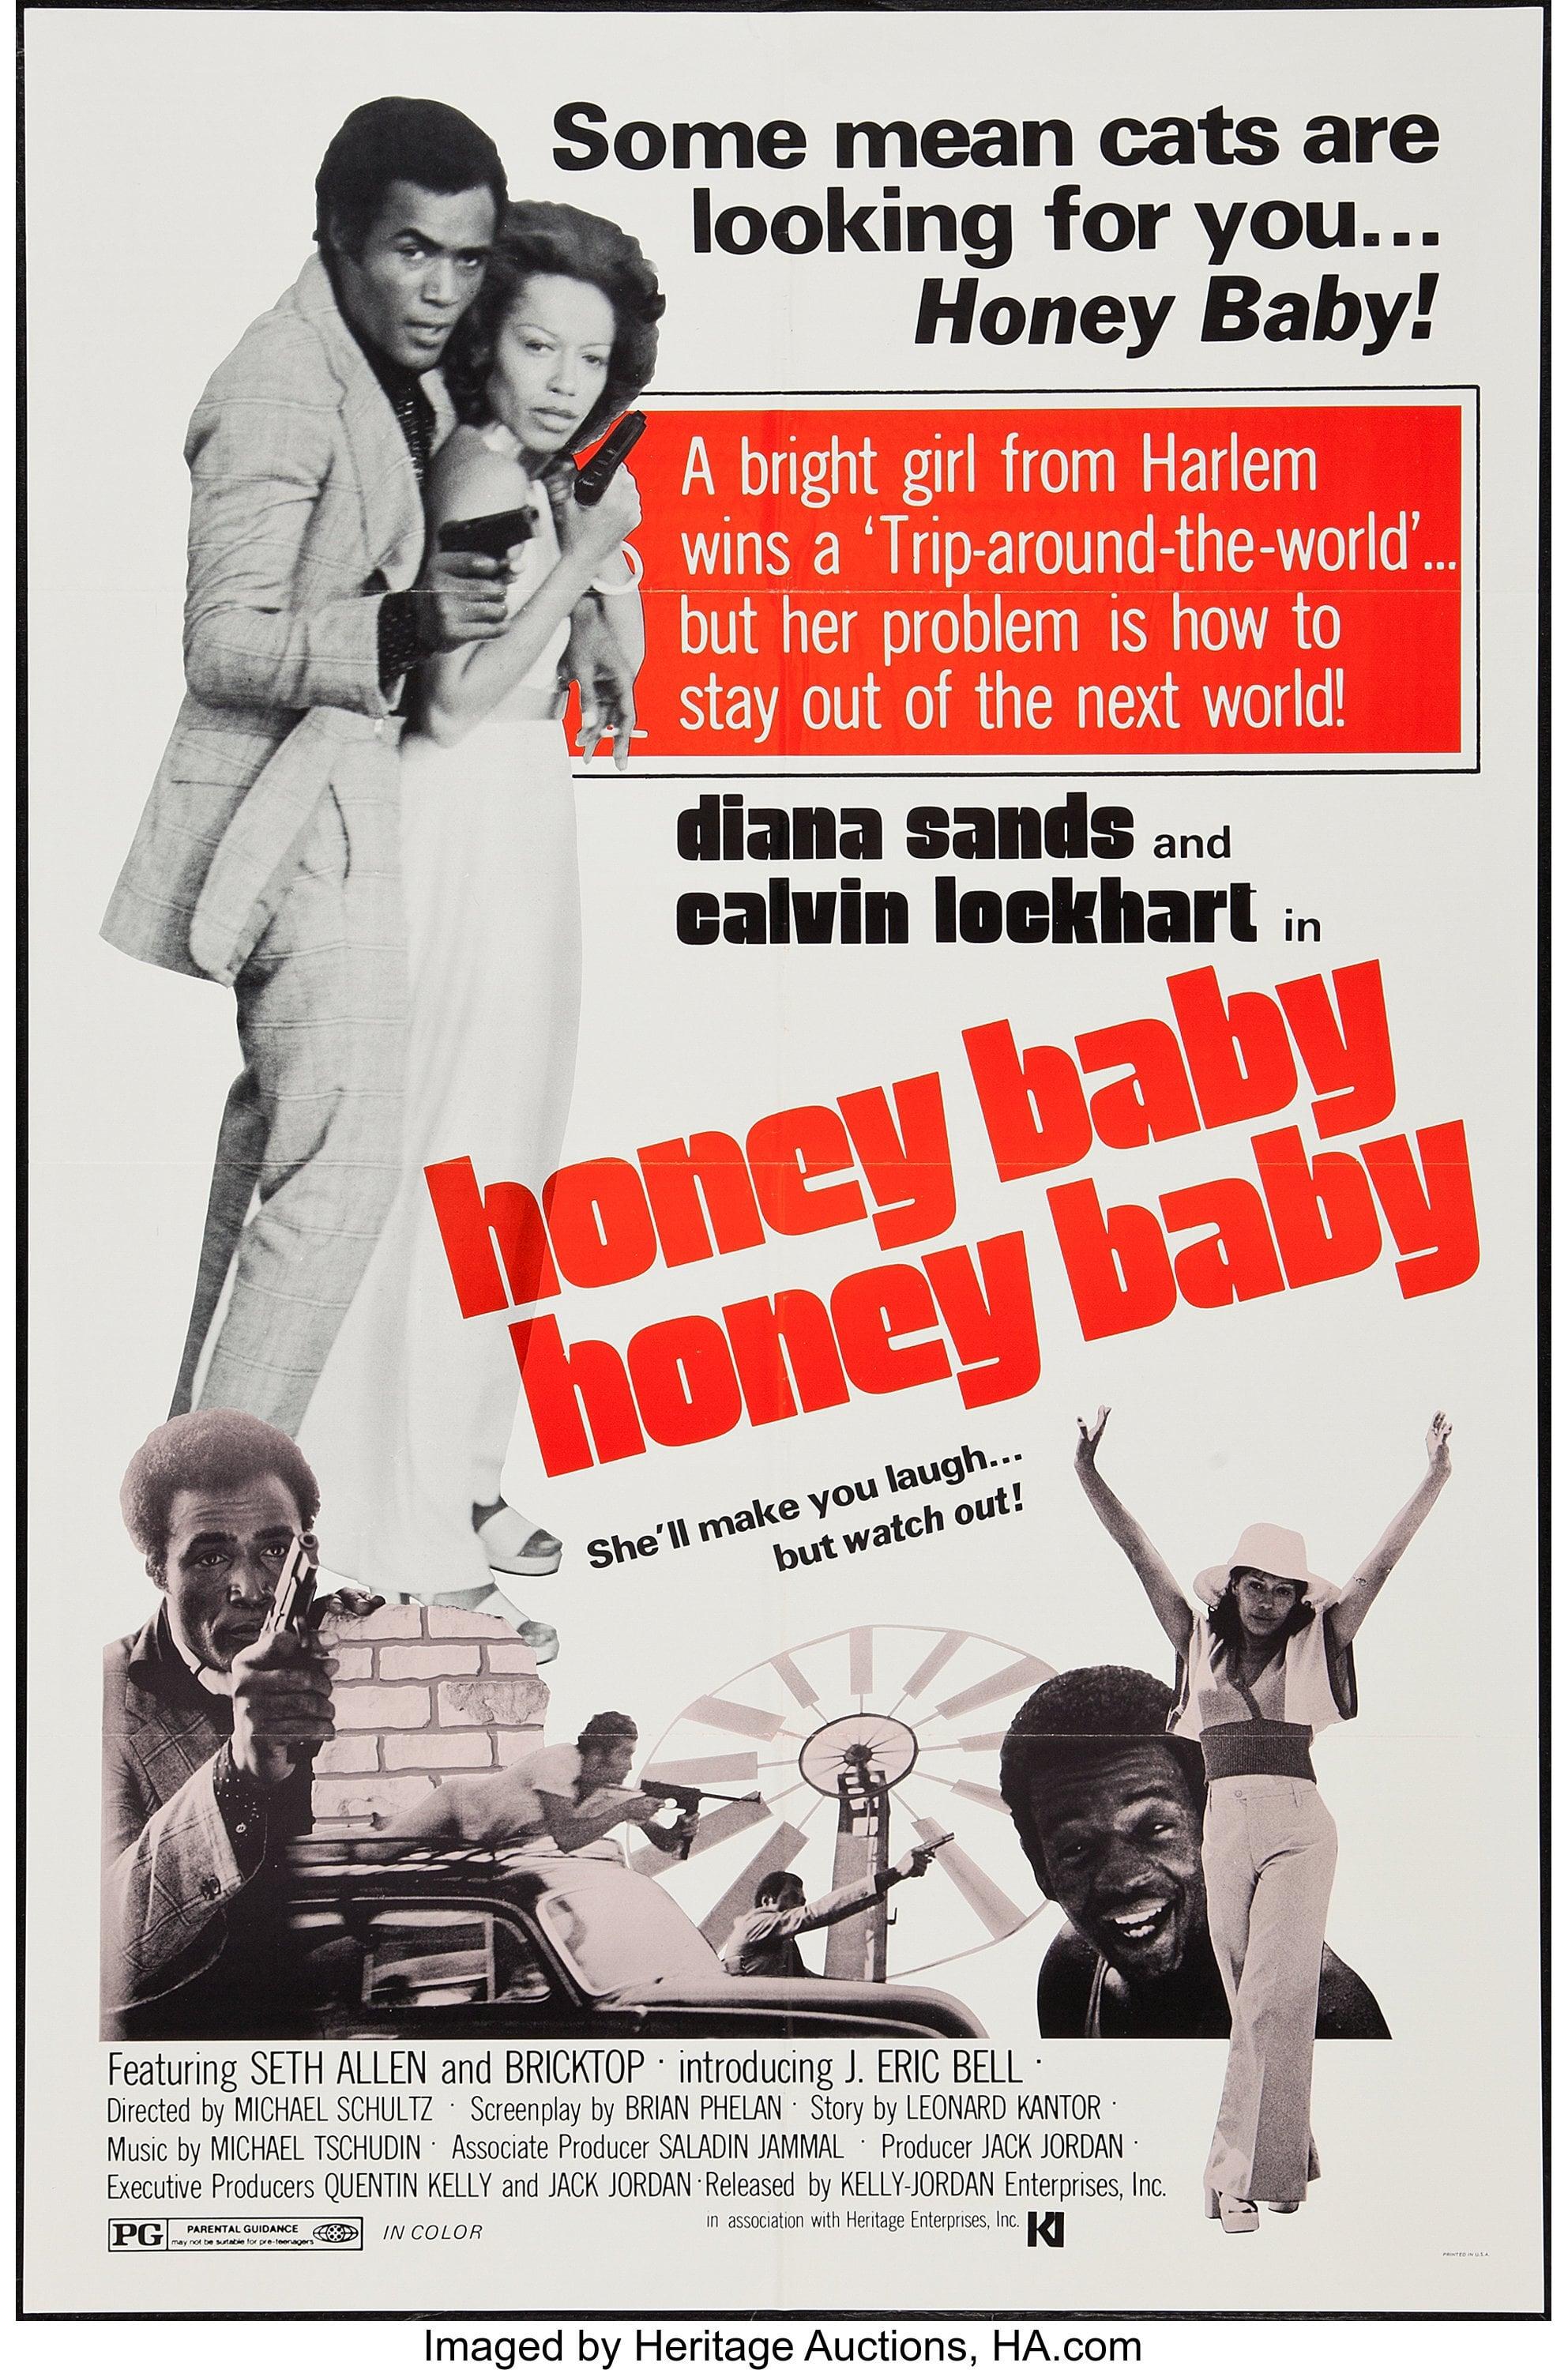 Honeybaby, Honeybaby poster